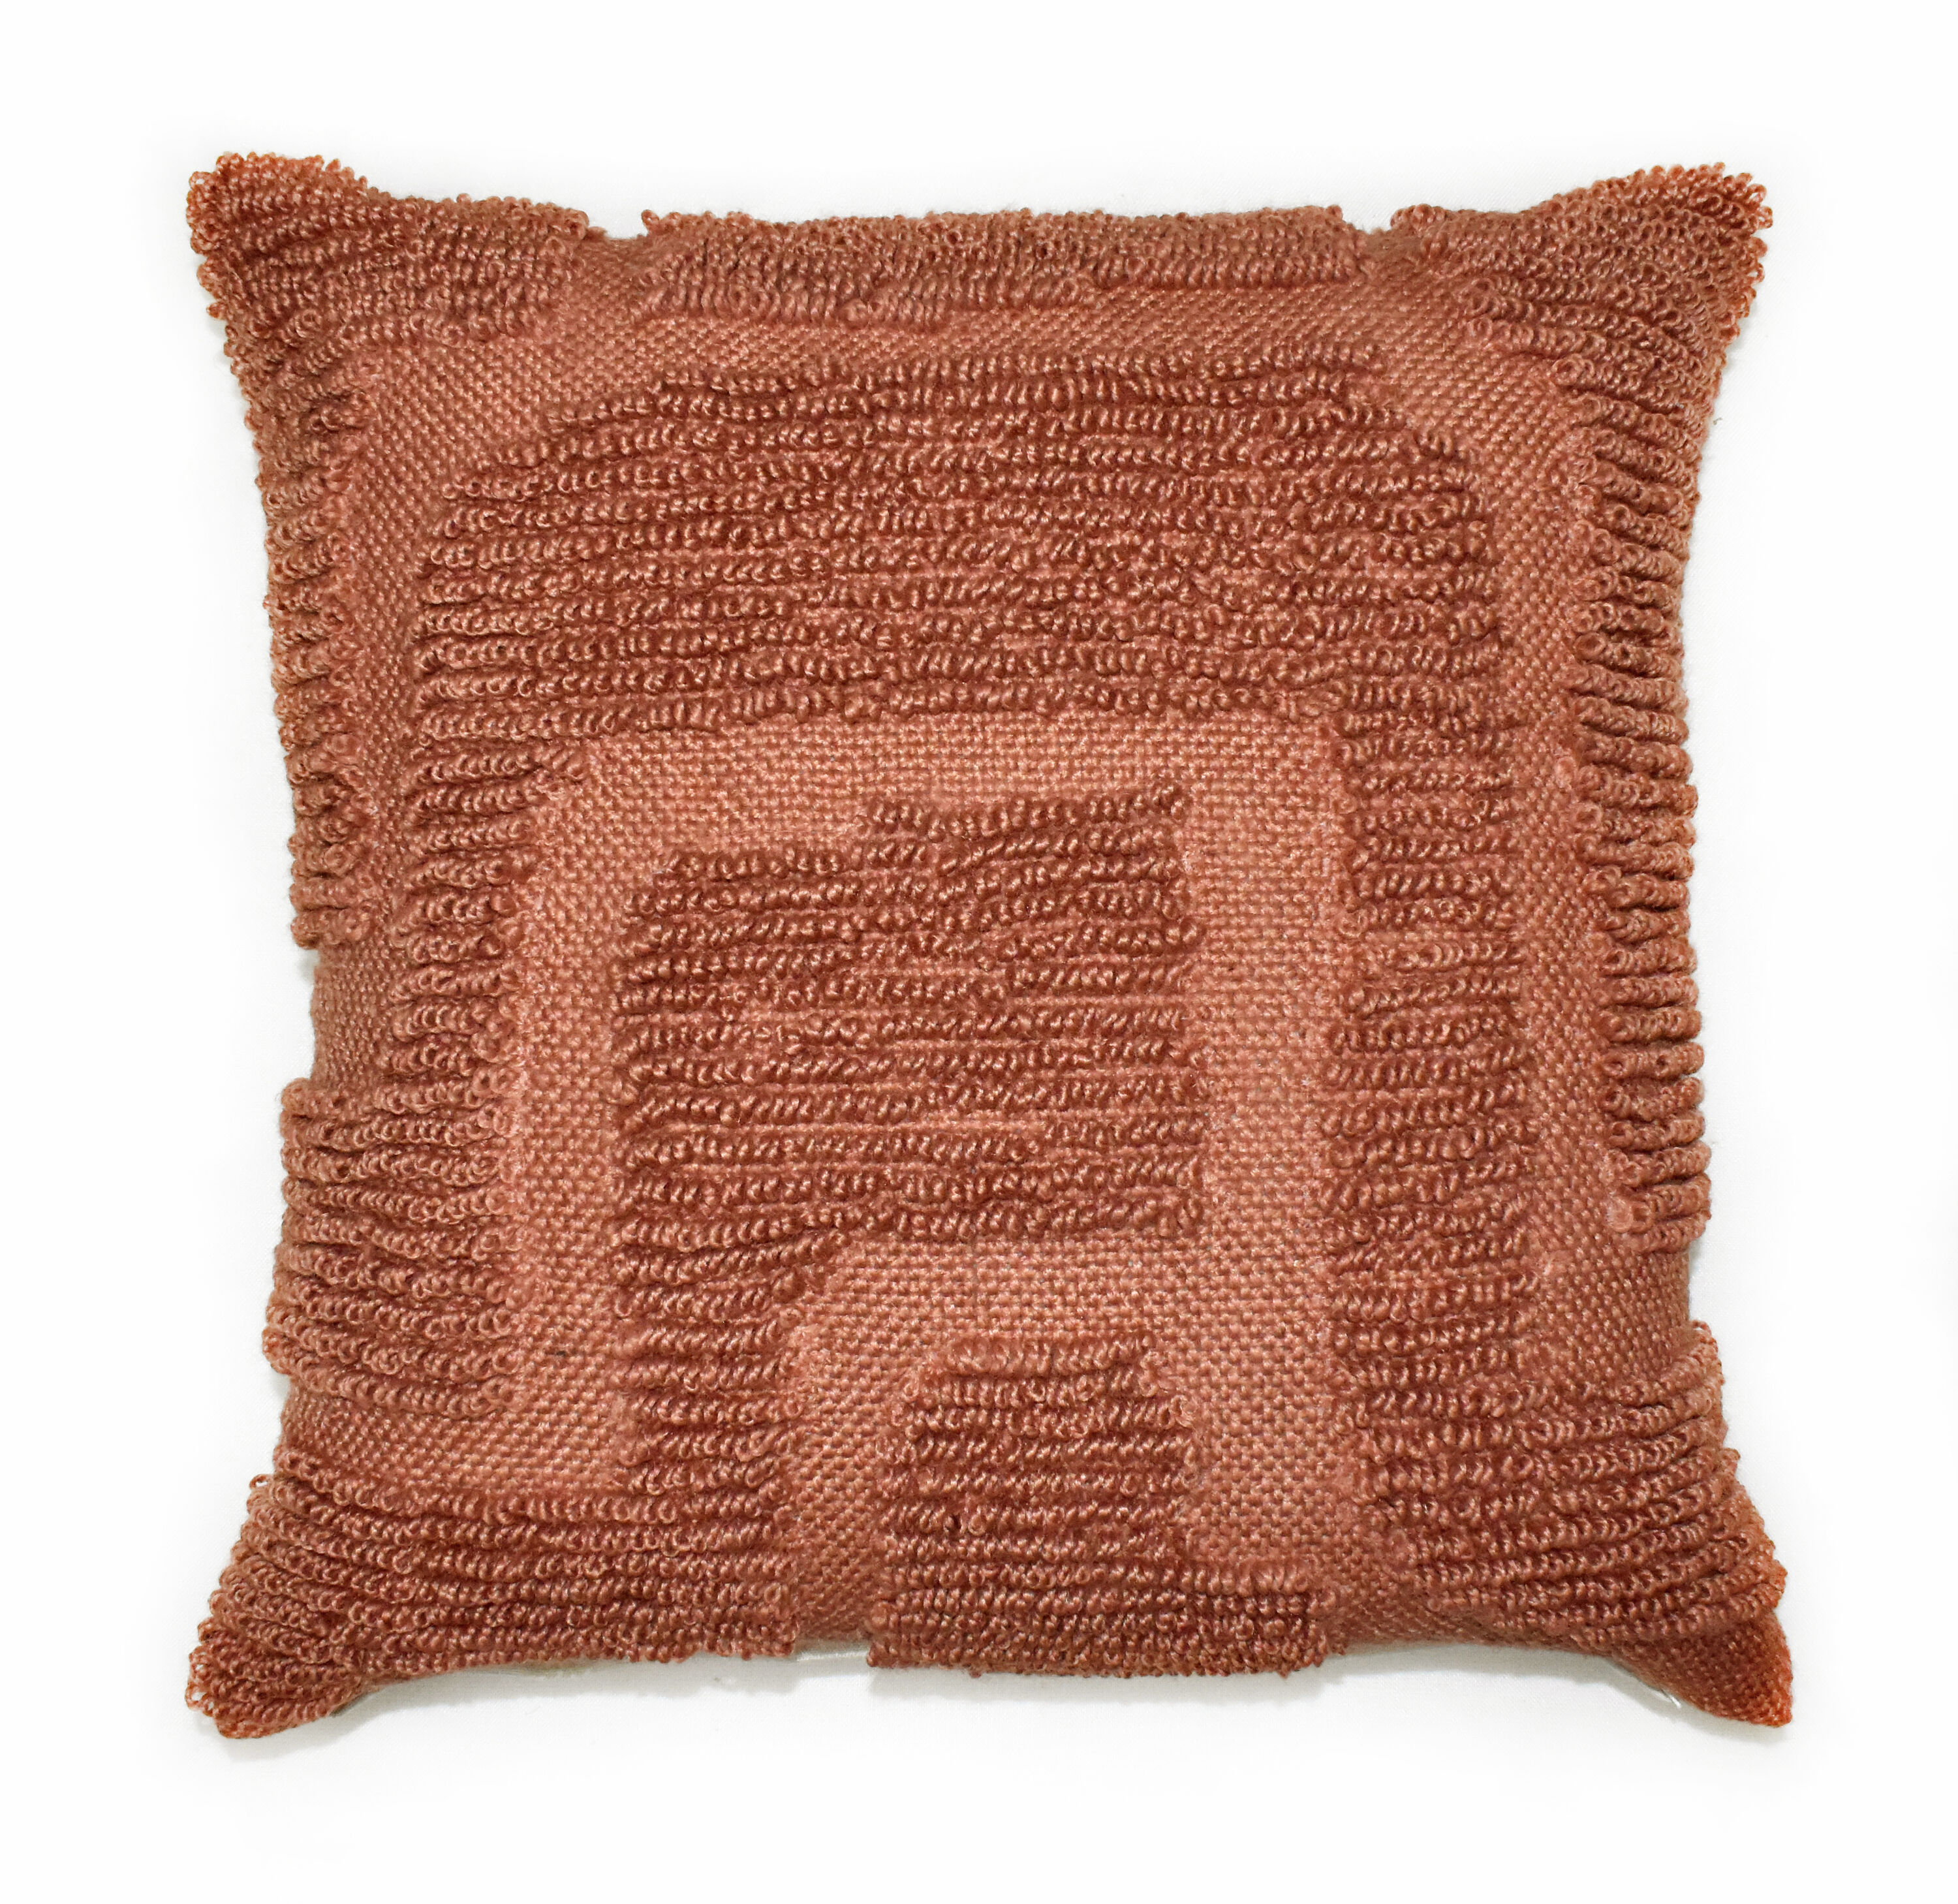 New Upholstered Throw Pillows Set of 2 18x18 Orange Tan Cream